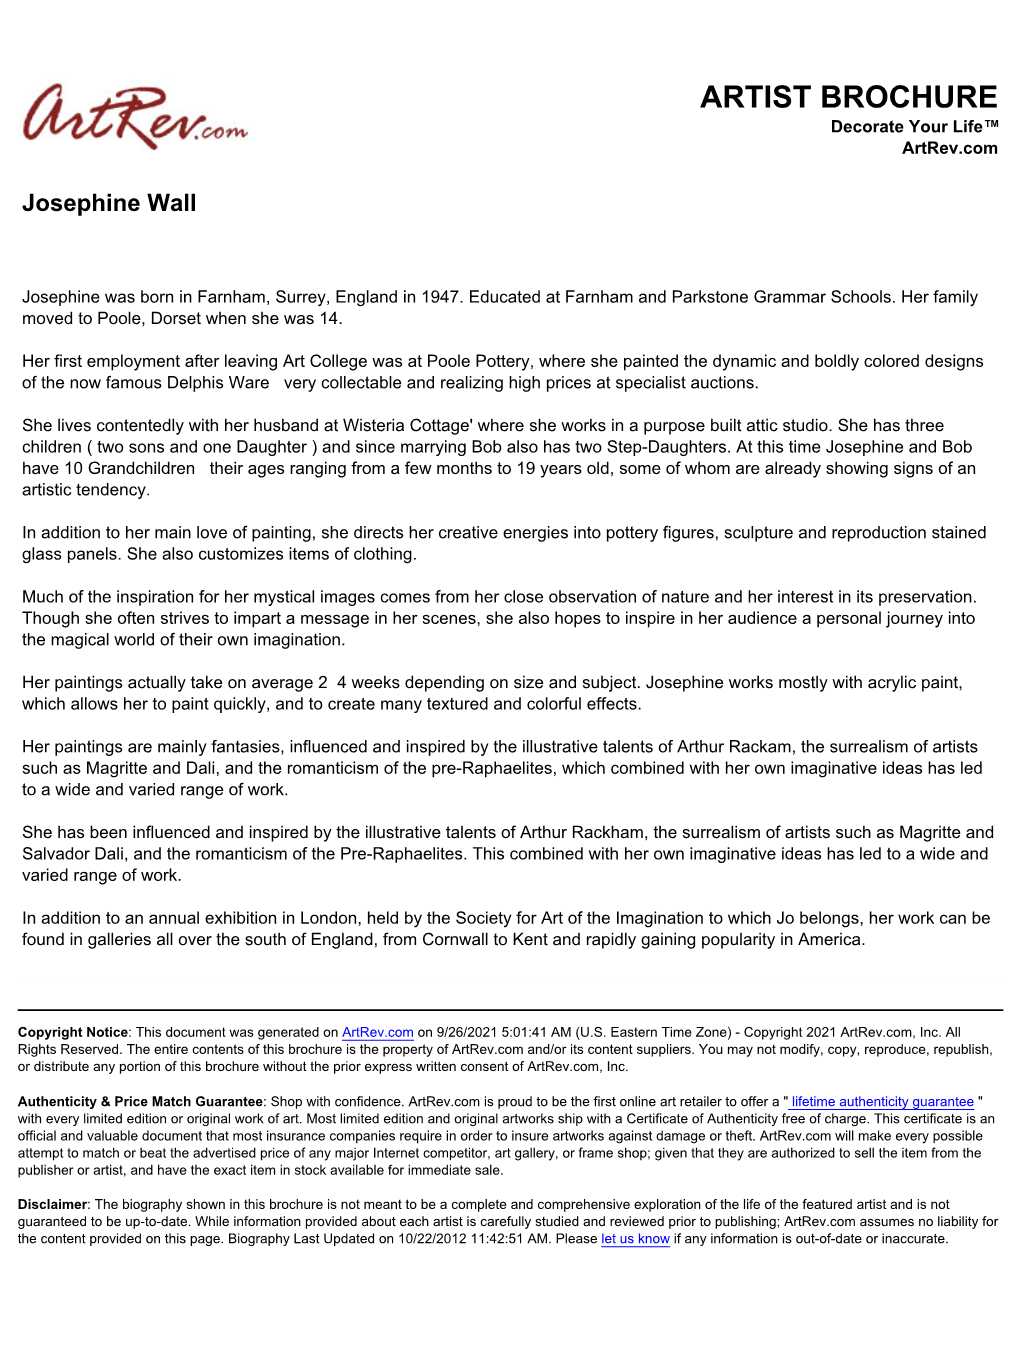 Josephine Wall Biography